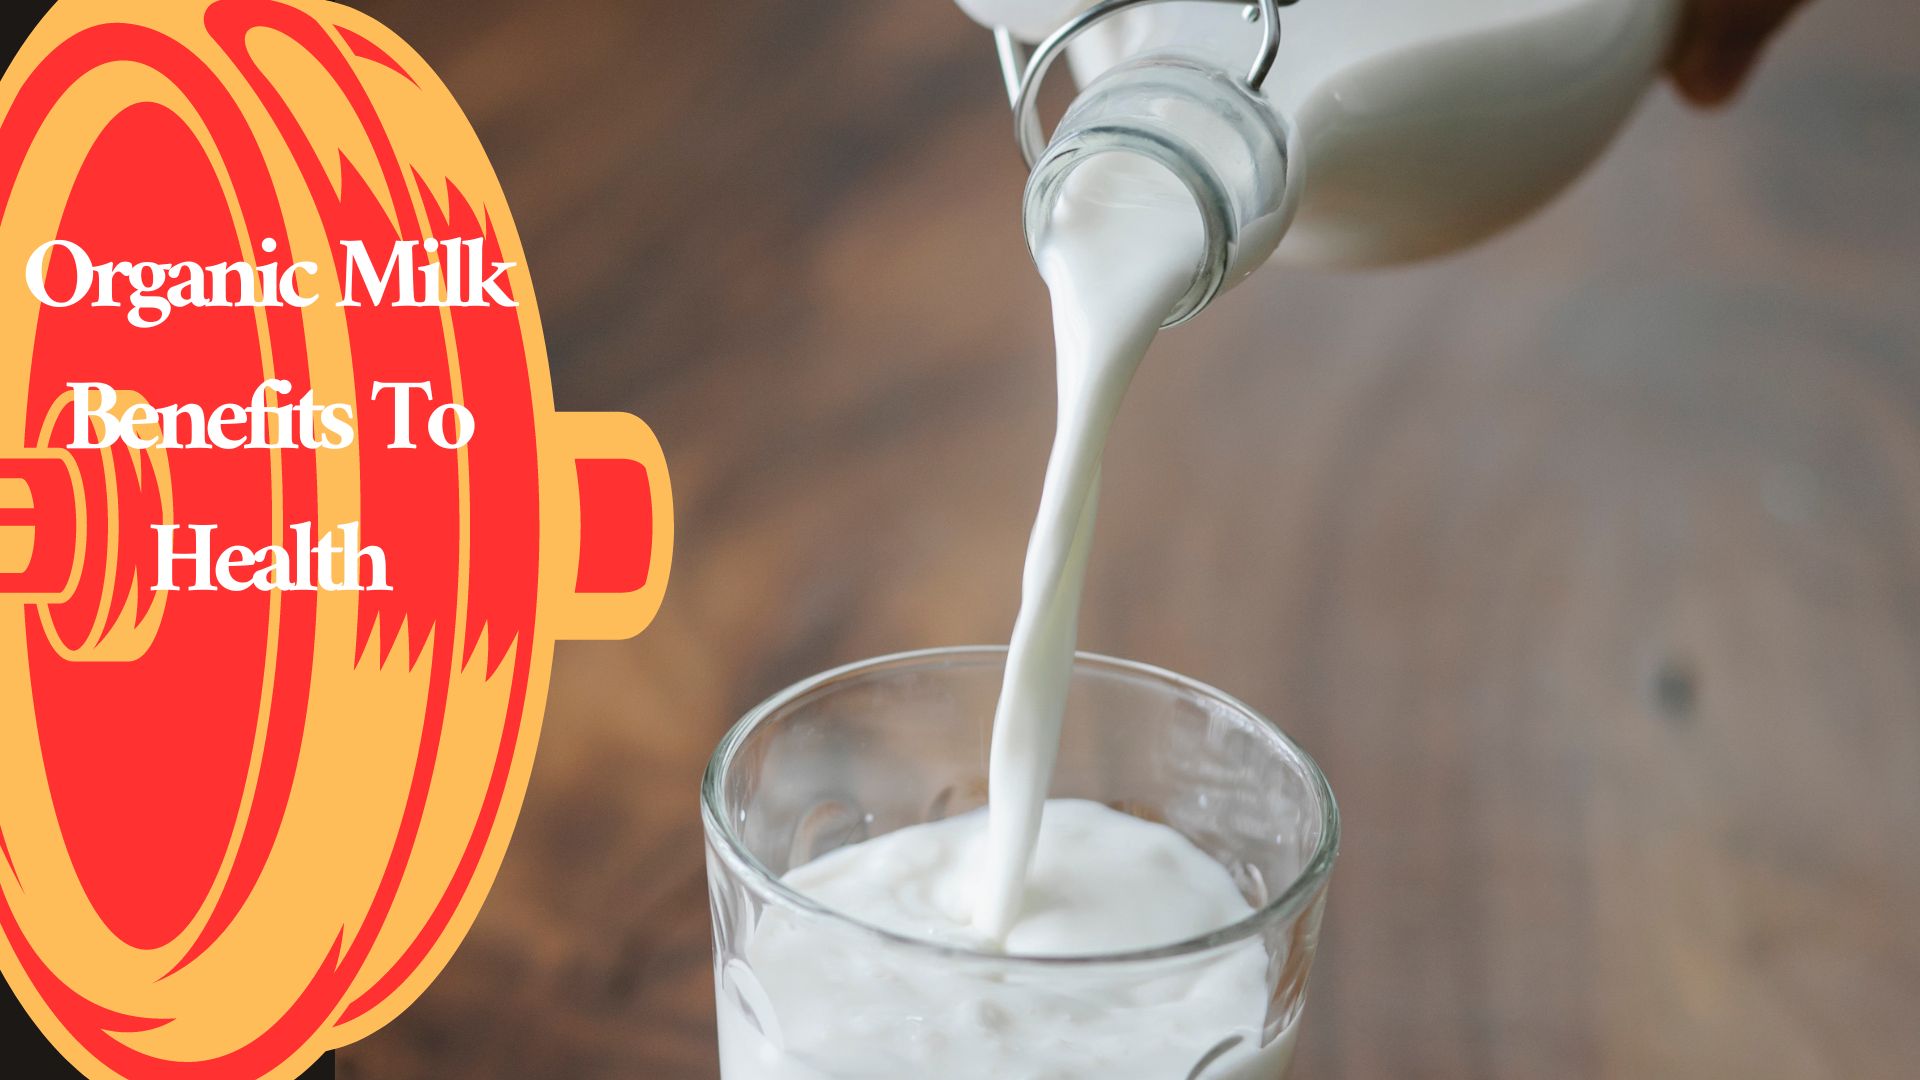 Organic Milk Benefits To Health